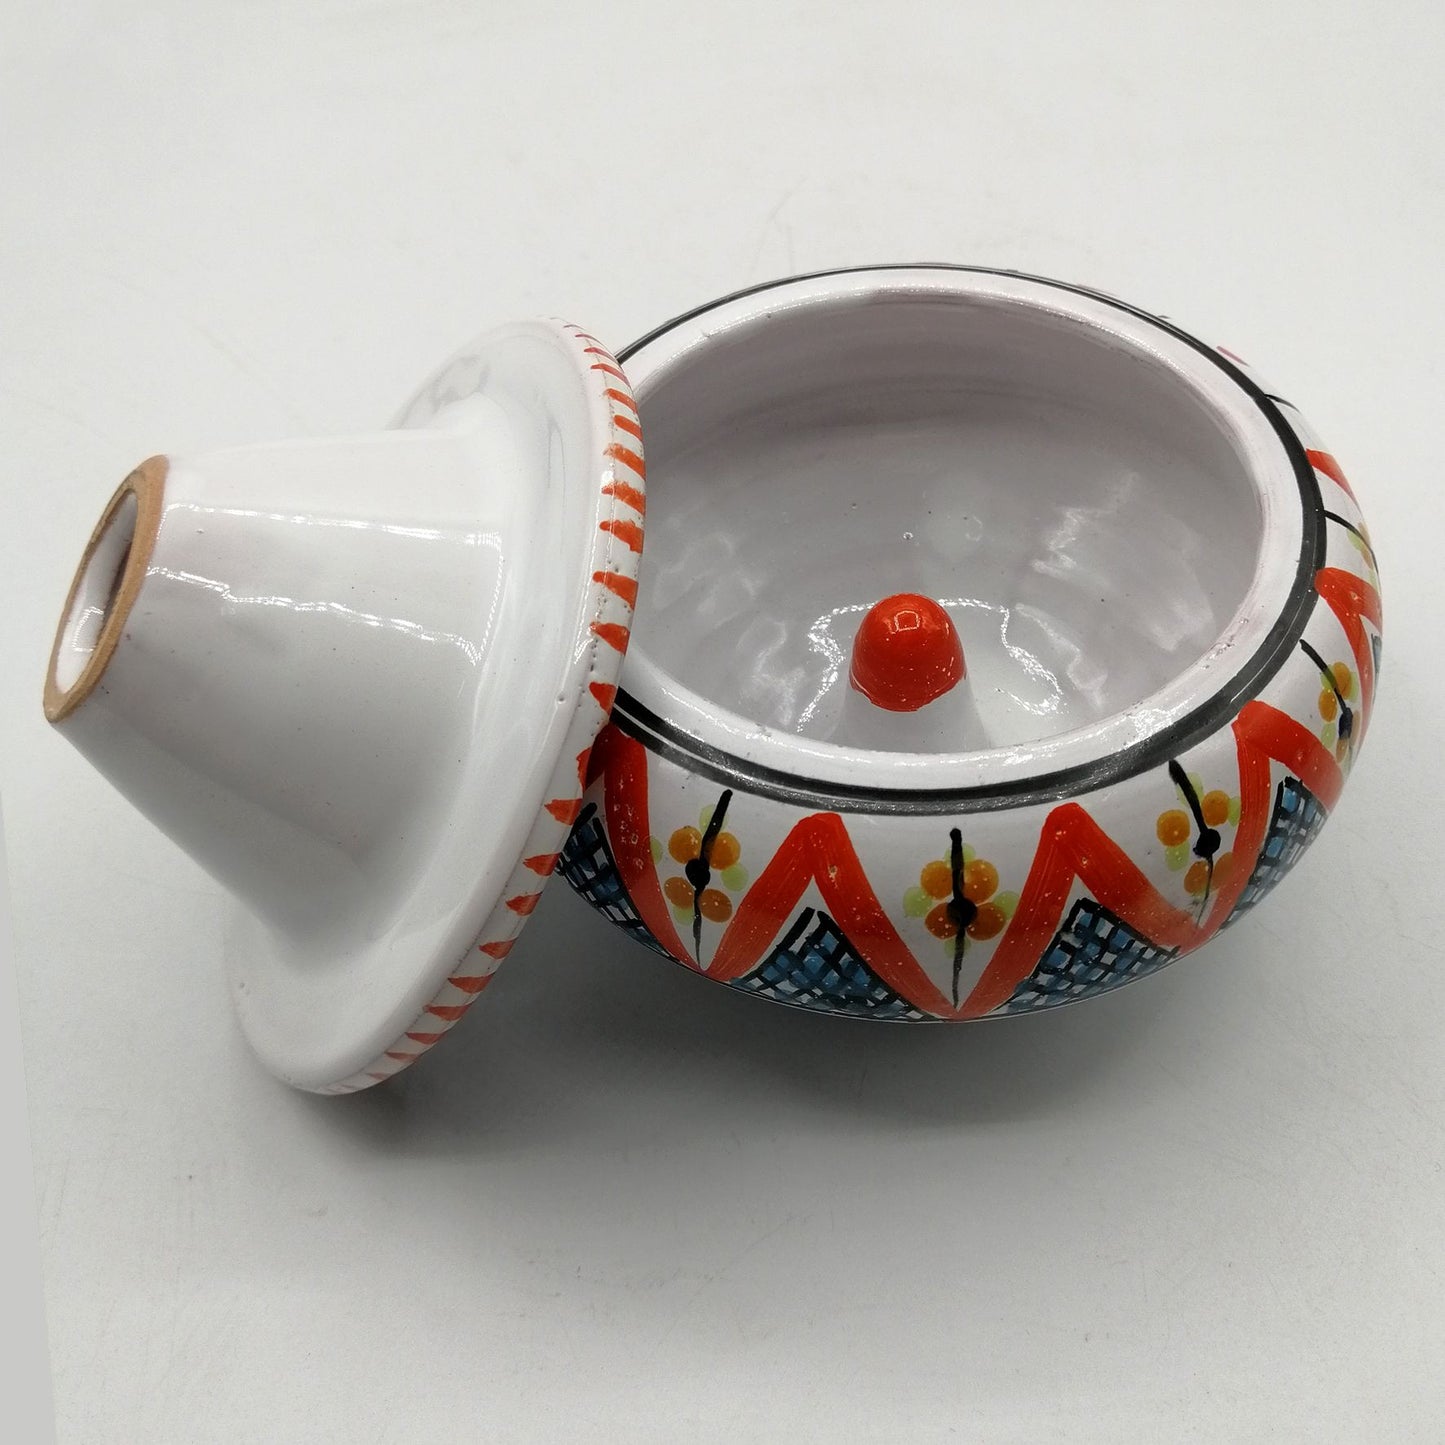 Etnico Arredo Posacenere Ceramica Antiodore Tunisina Marocchine 1211201109